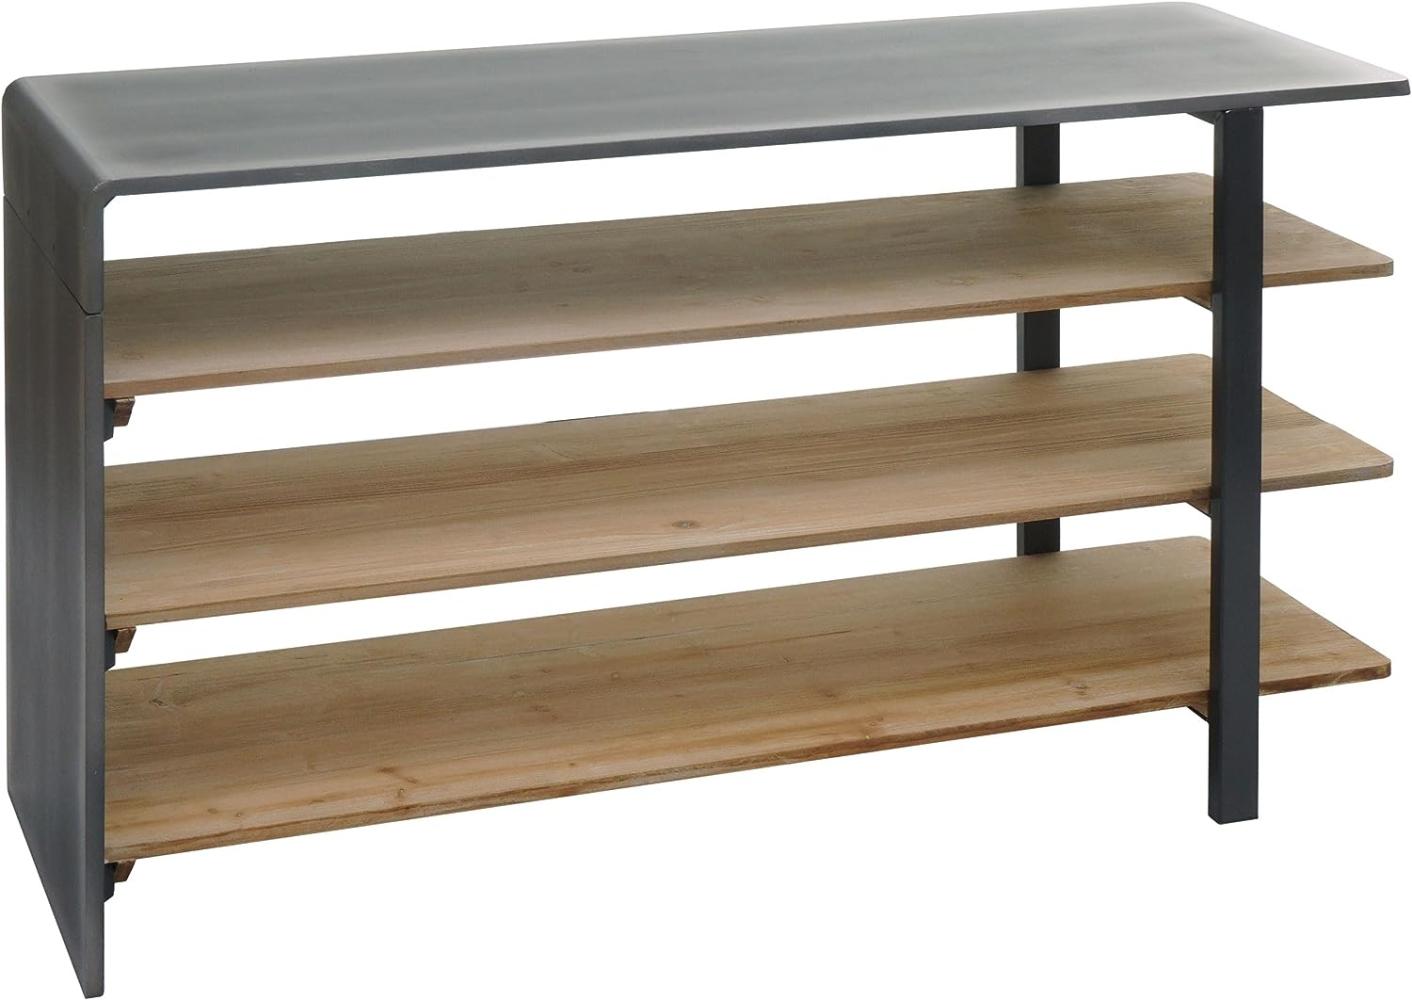 Regal HWC-L75, Wohnregal Bücherregal Schuhregal Sideboard, Massiv-Holz Industrial 72x119x40cm, natur mit Metall-Optik Bild 1